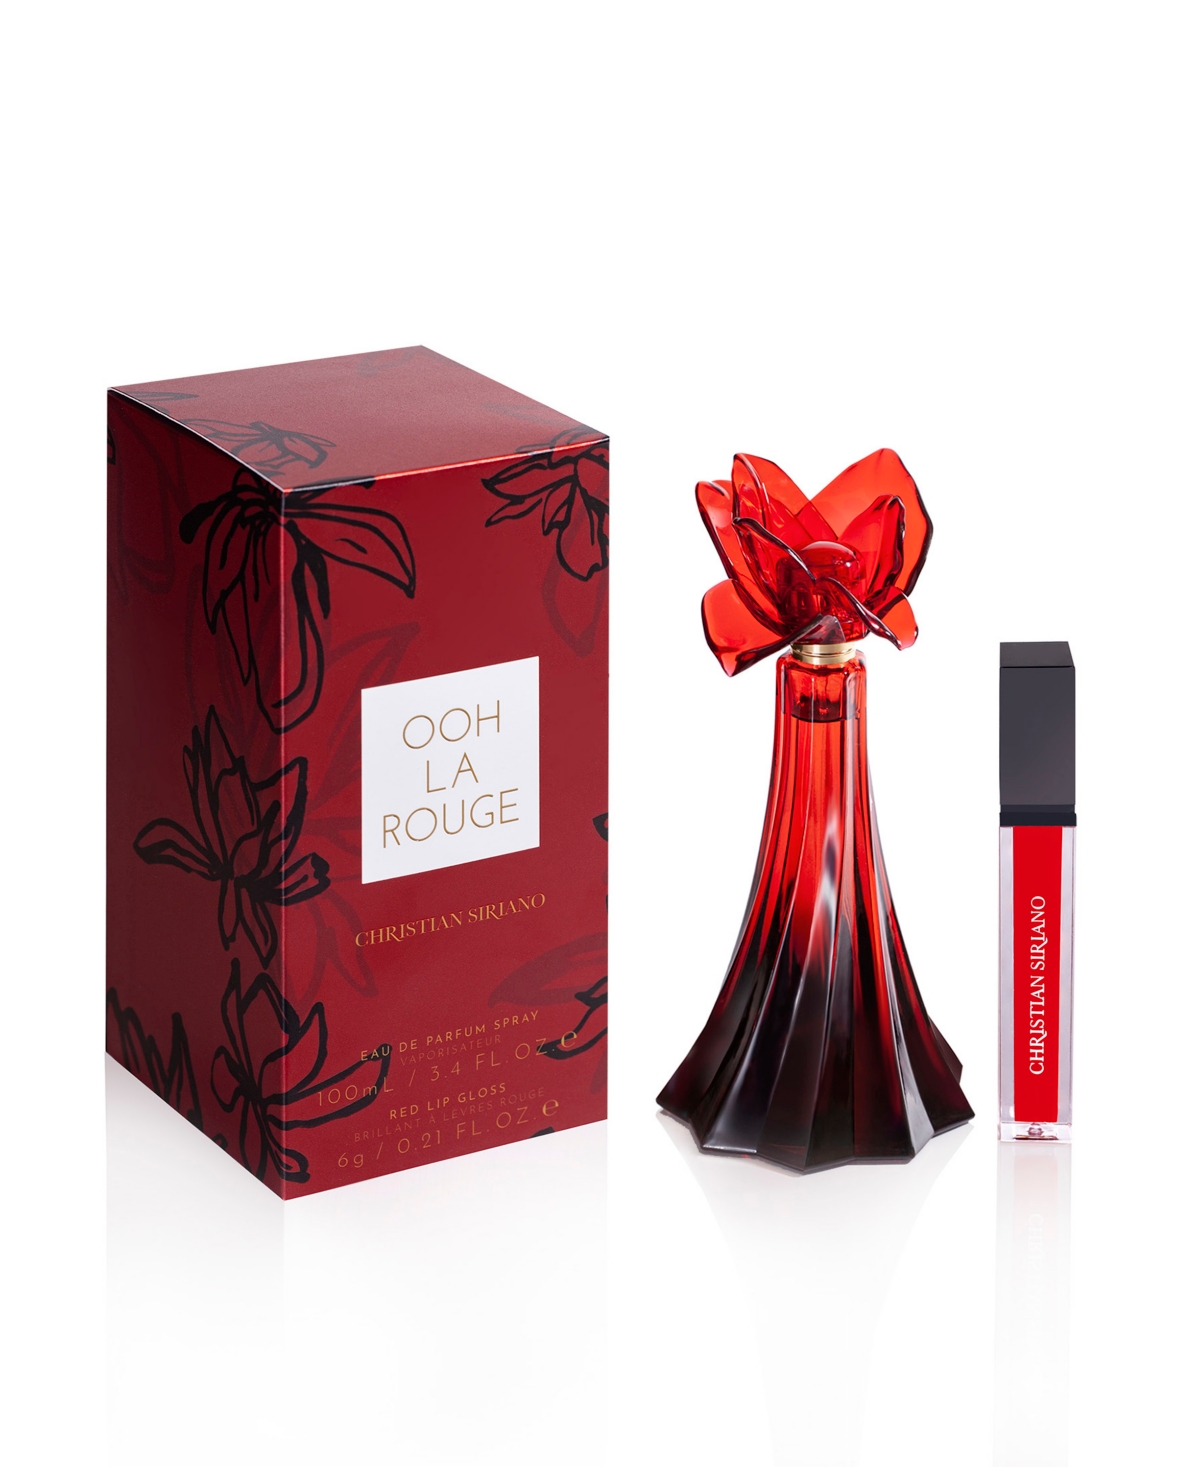 Ooh La Rouge Perfume 3.4 oz and Lip Gloss 0.21 oz